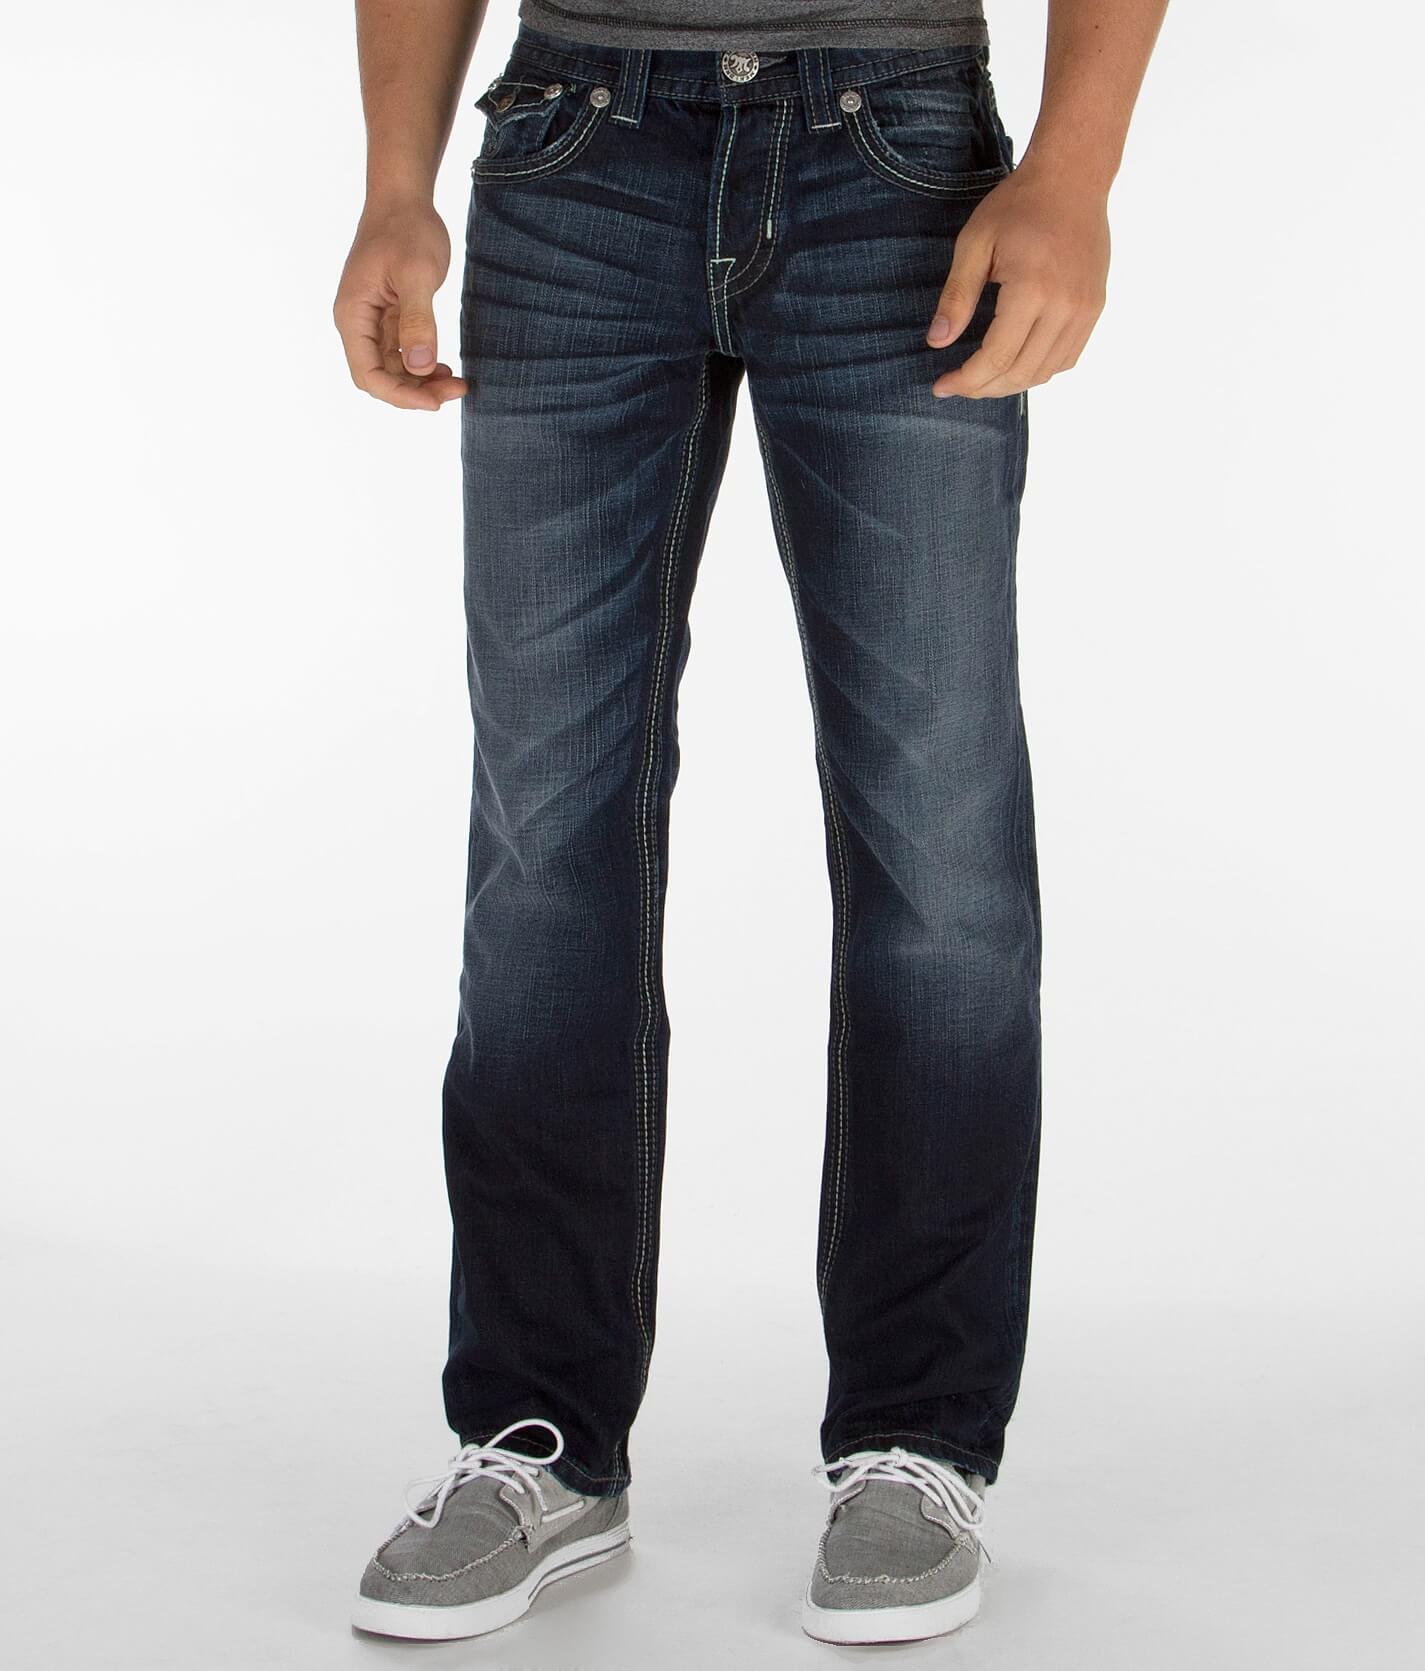 markham sale jeans